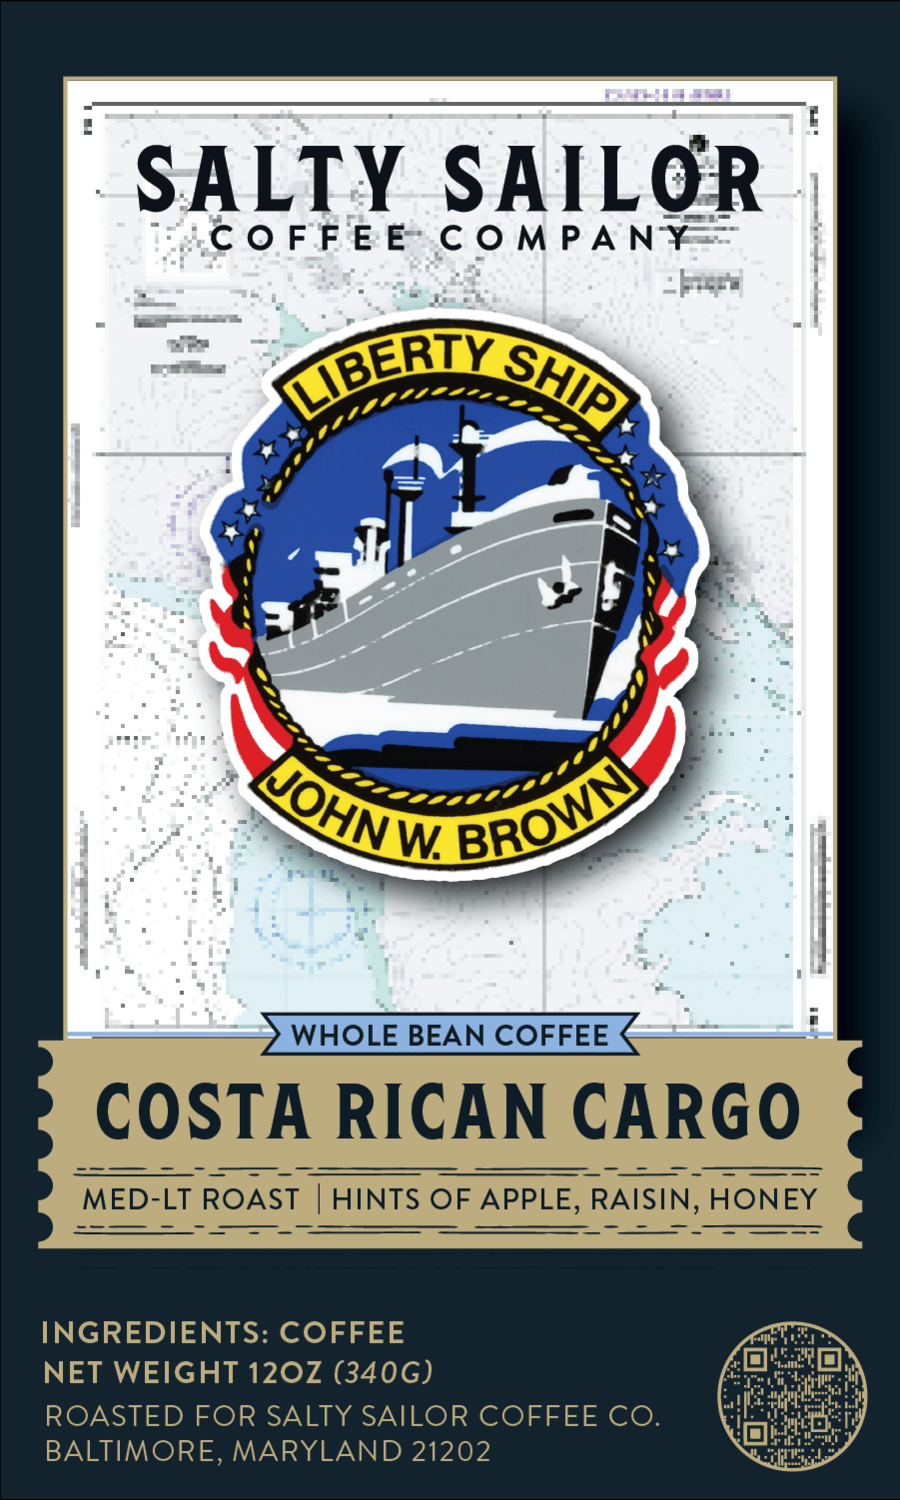 SS John W. Brown Costa Rican Cargo